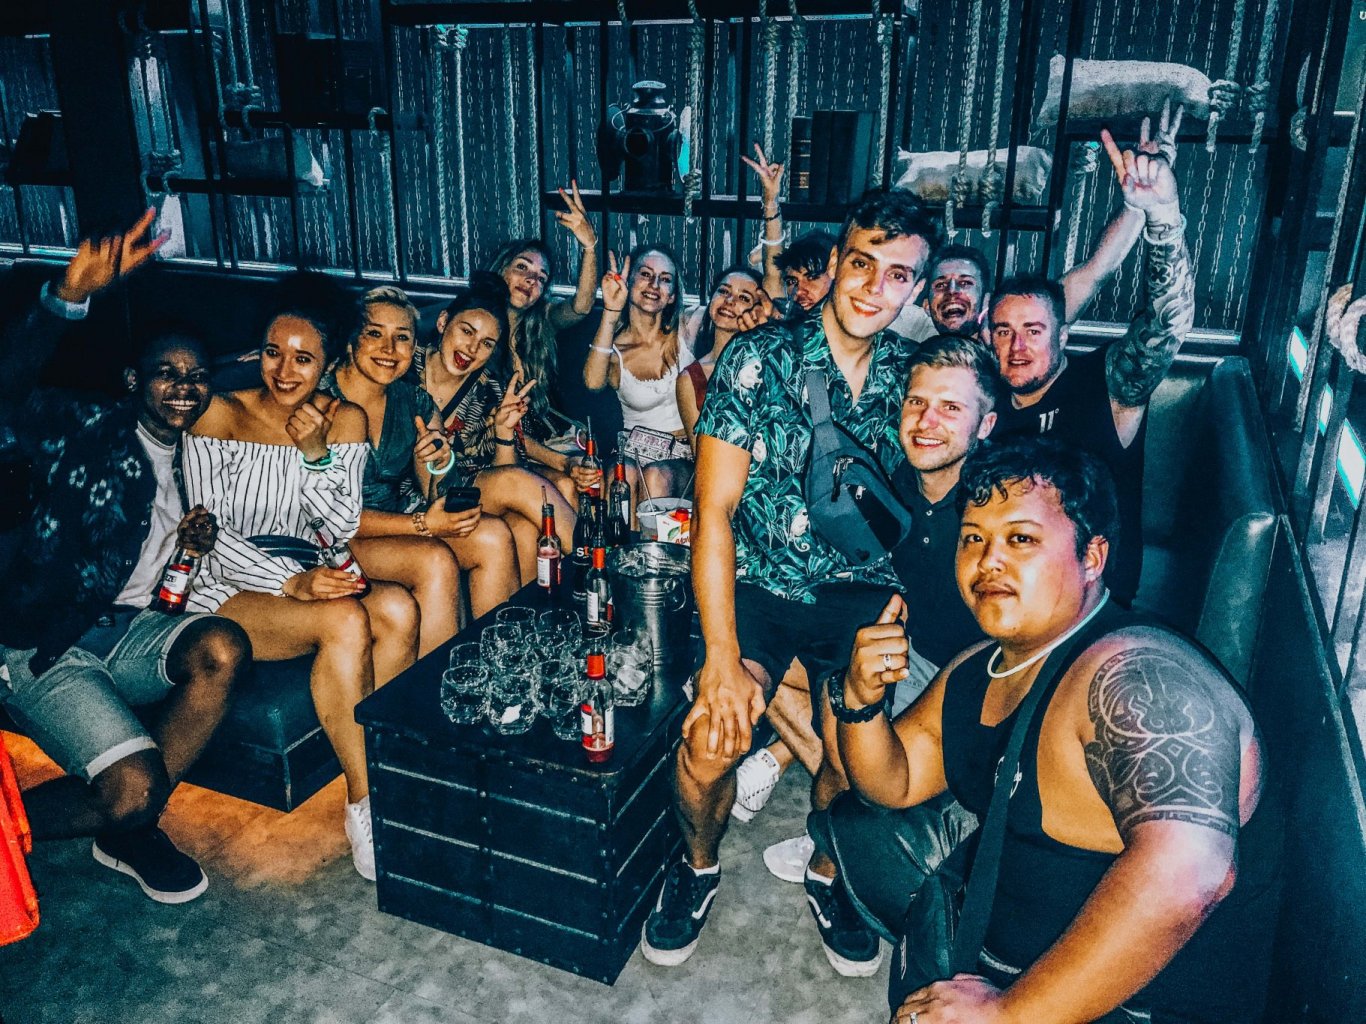 Group at a bar, Cancun Mexico